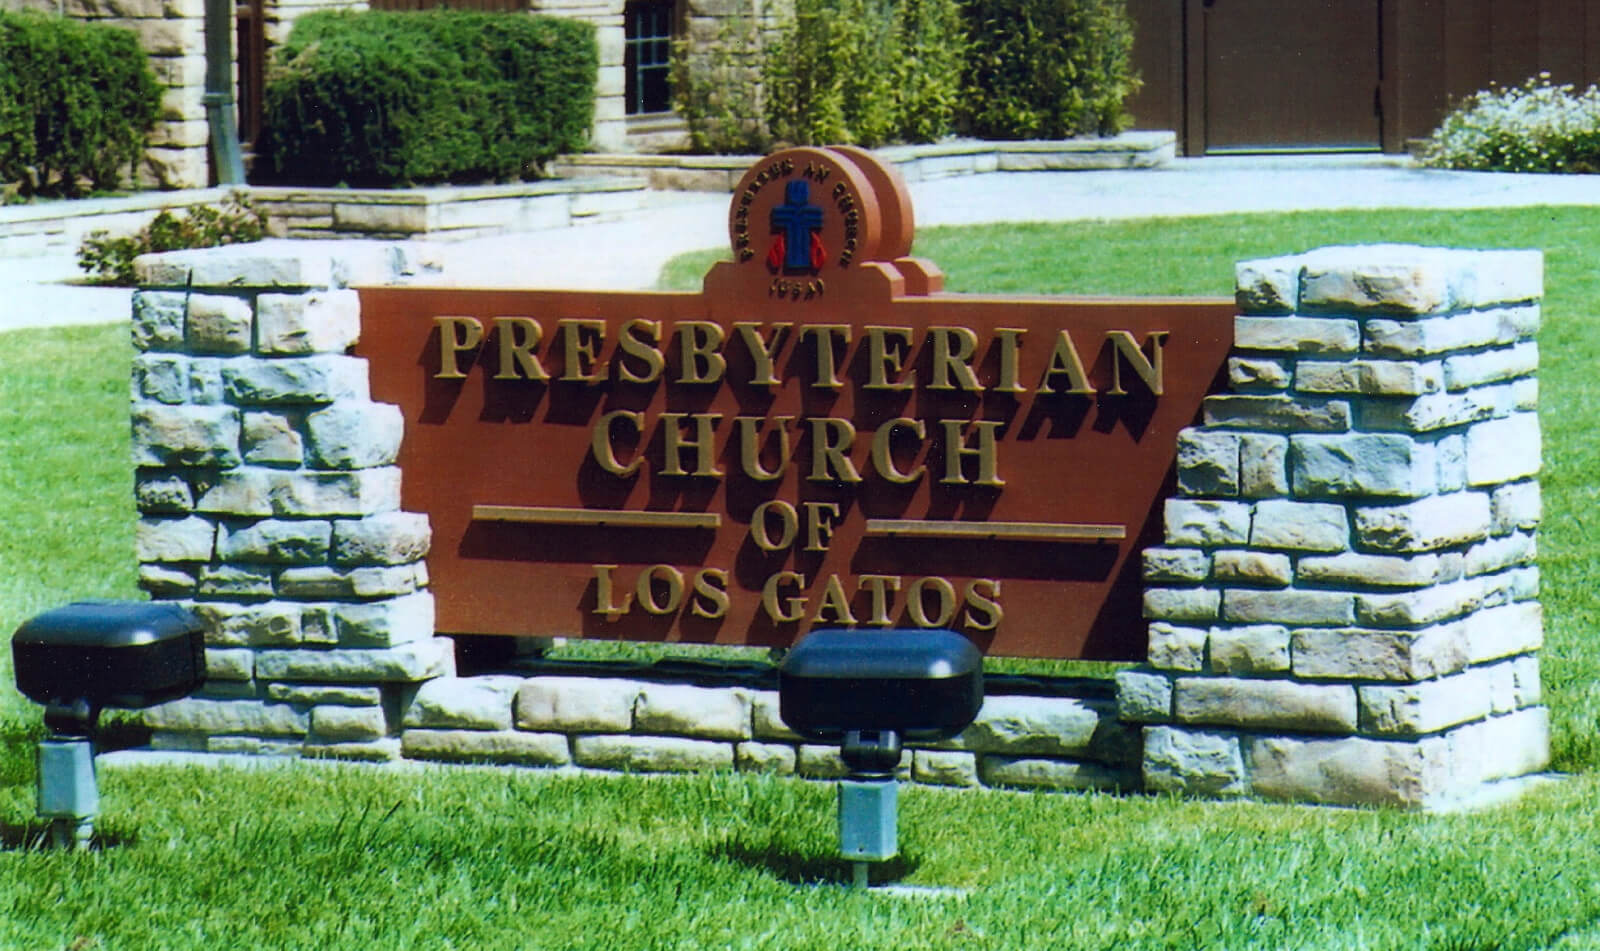 Los Gatos church signs presbyterian church